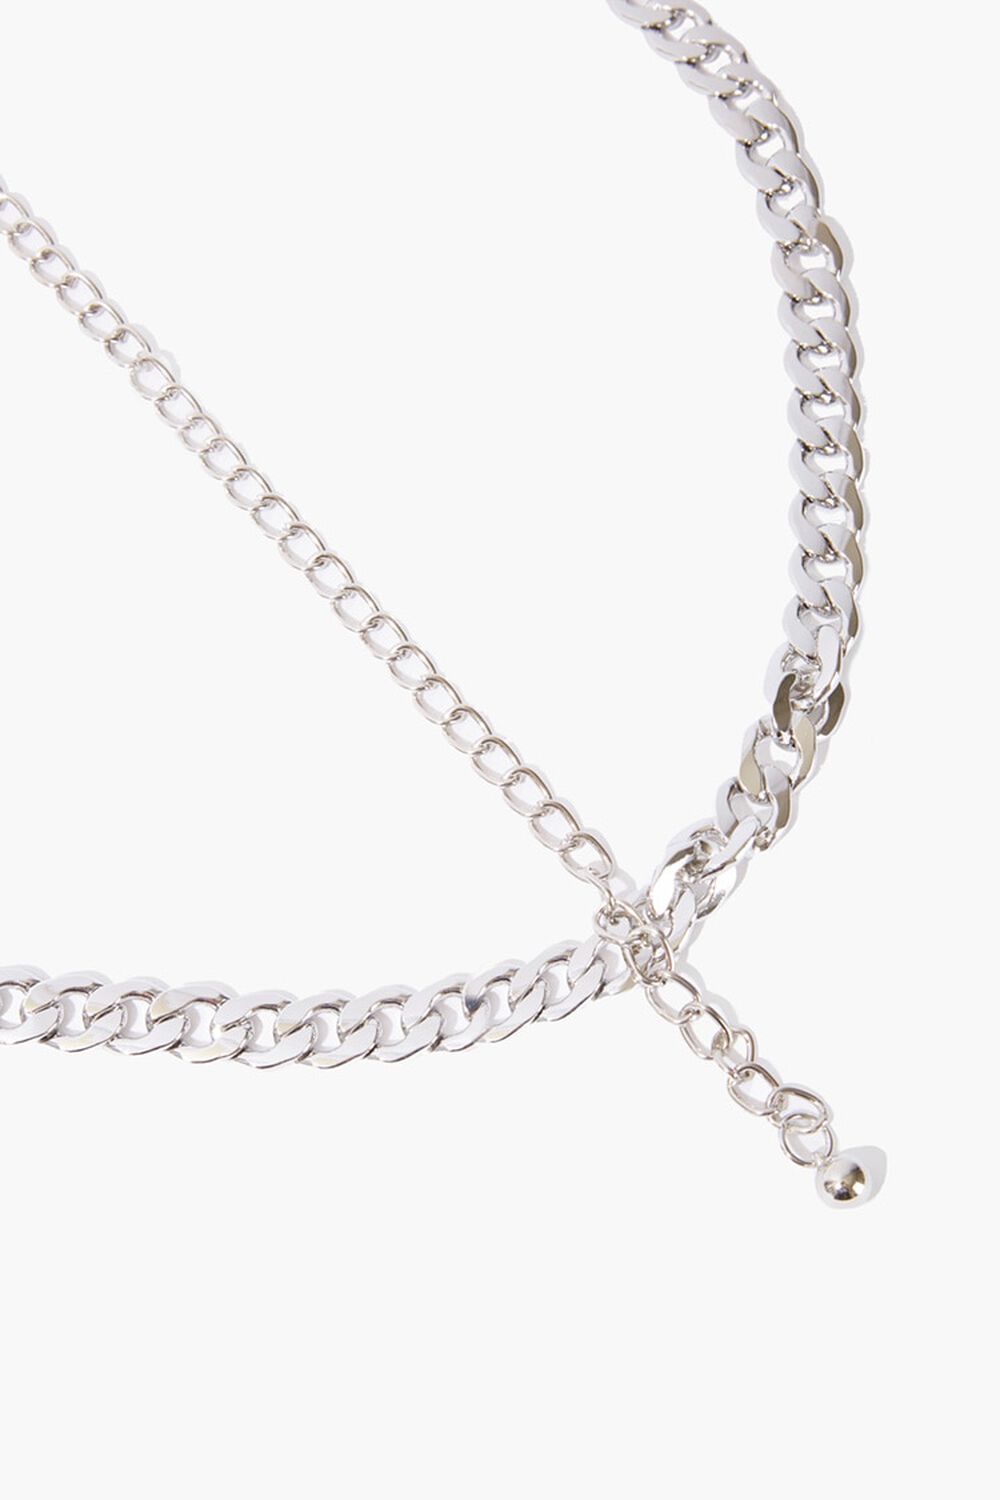 SILVER Curb Chain Waist Belt, image 1